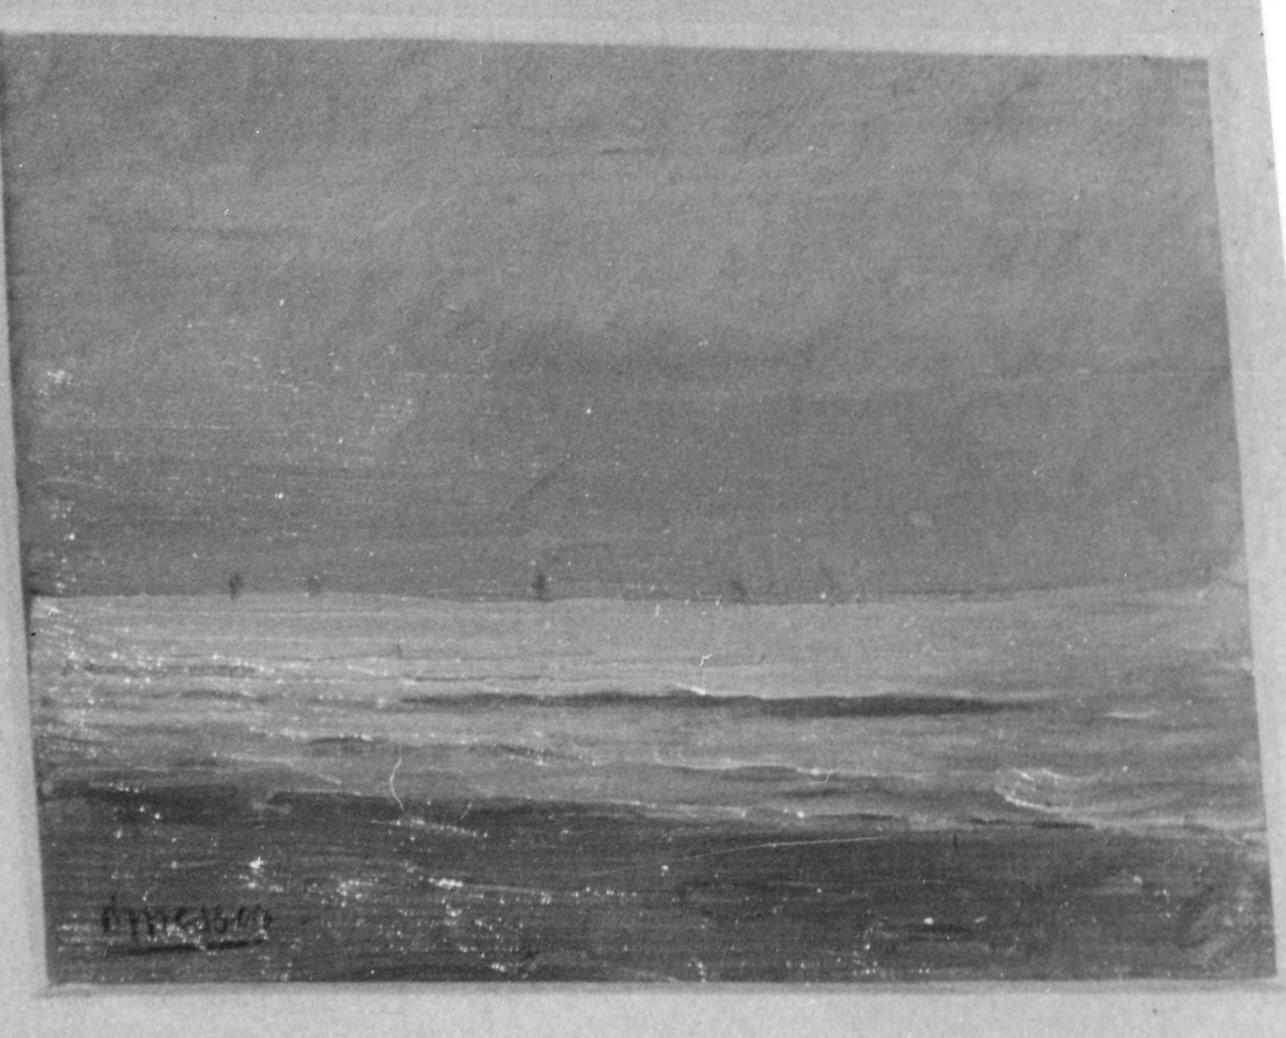 marina al tramonto (dipinto) di Messori Orfeo (sec. XX)